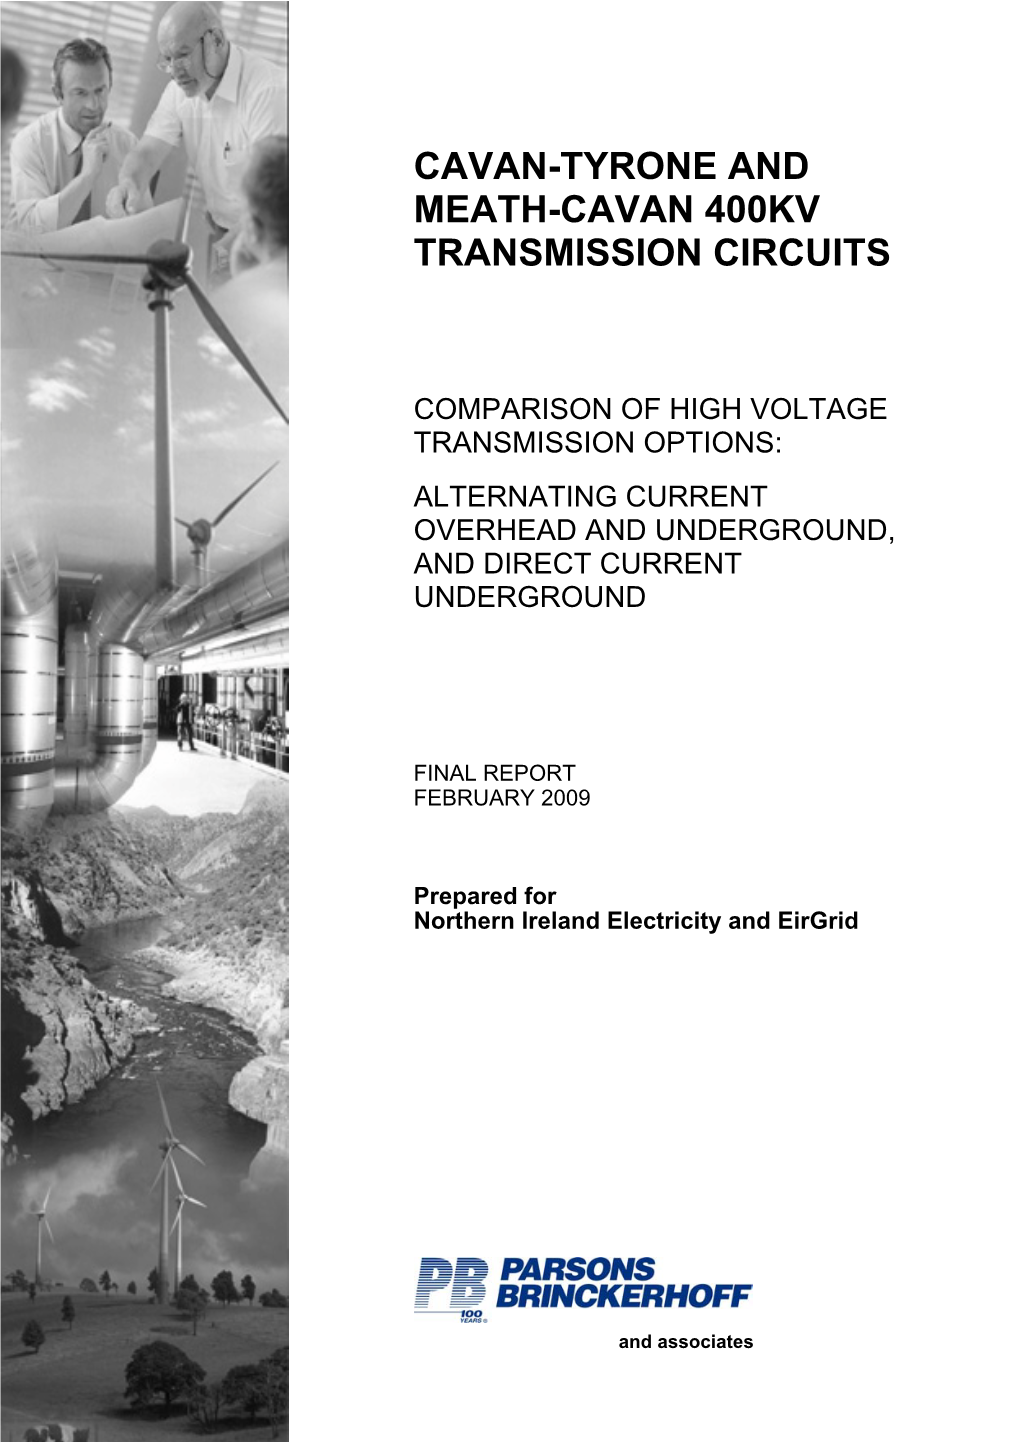 Cavan-Tyrone and Meath-Cavan 400Kv Transmission Circuits